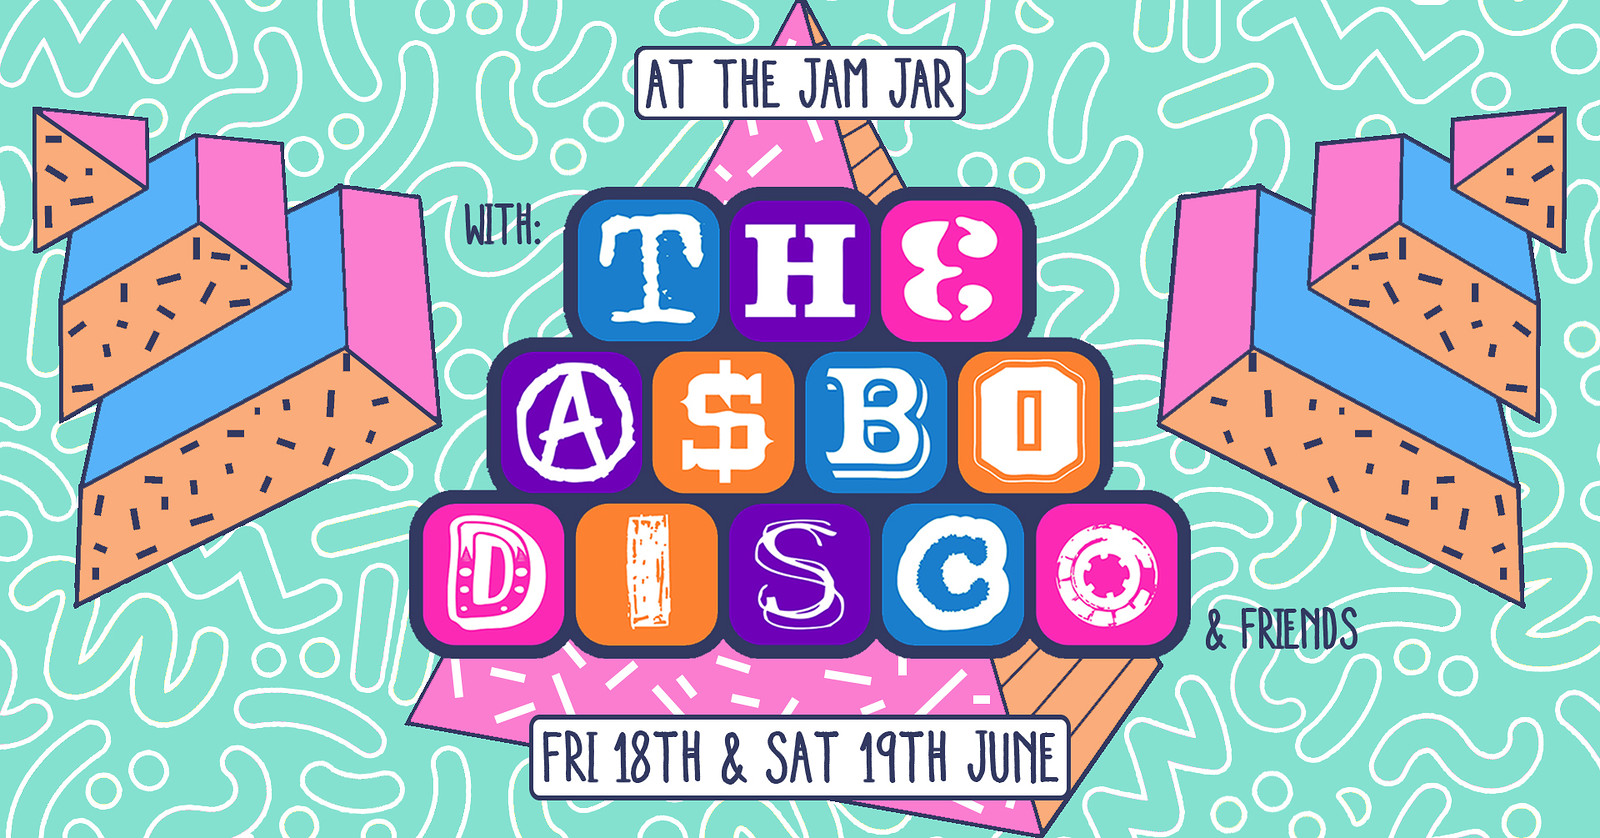 At The Jam Jar with Asbo Disco & Friends at Jam Jar